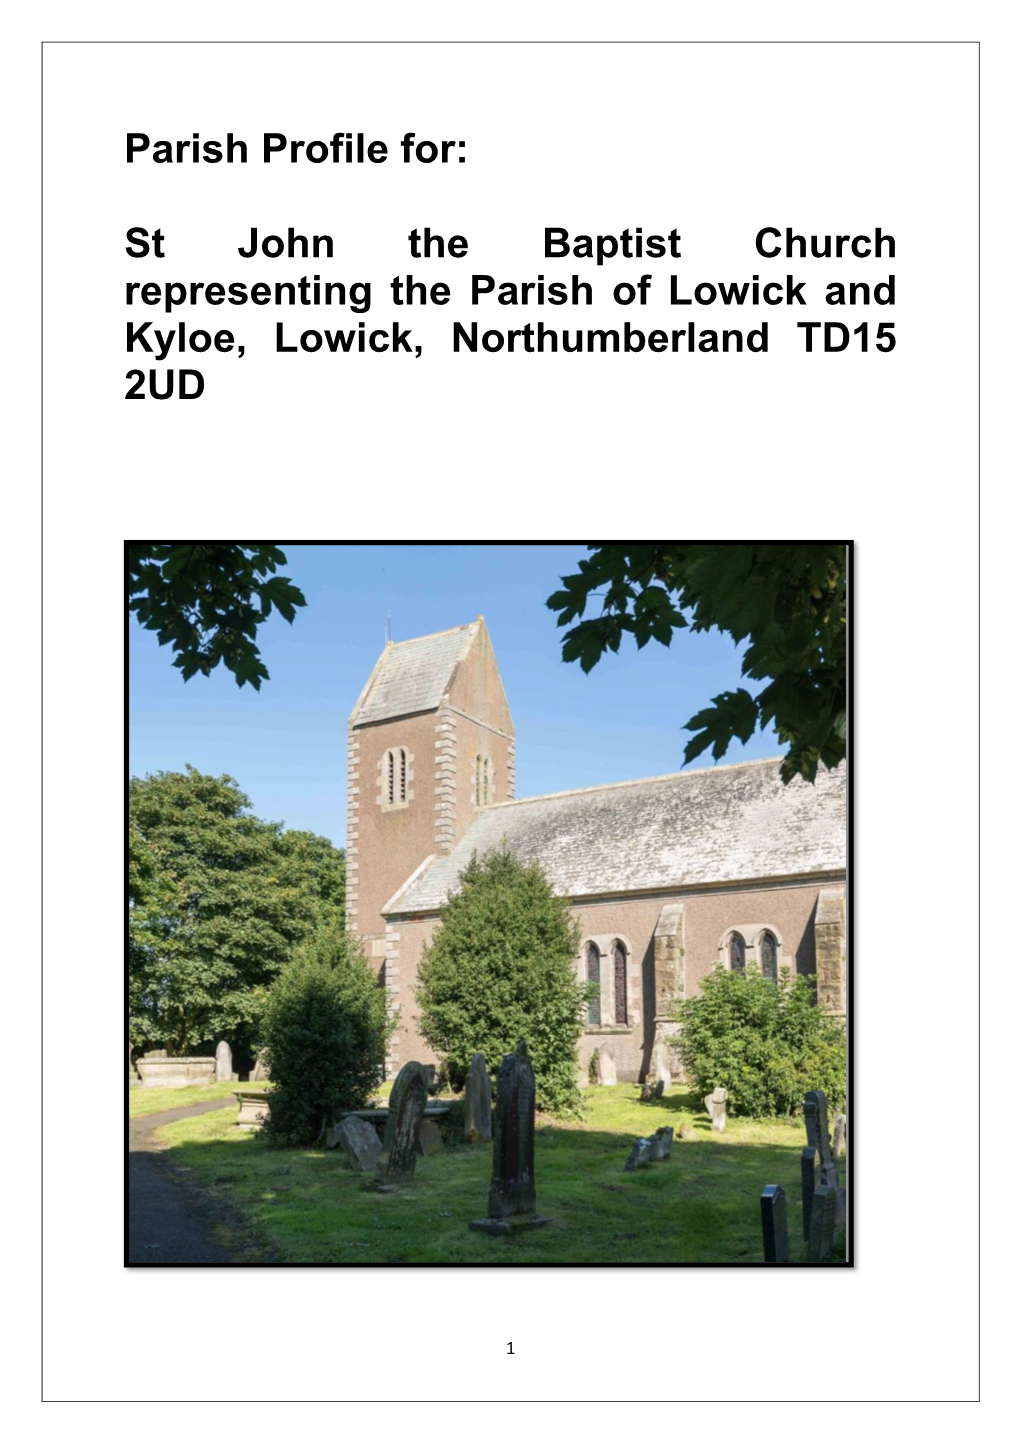 Parish Profile For: St John the Baptist Church Representing the Parish of Lowick and Kyloe, Lowick, Northumberland TD15